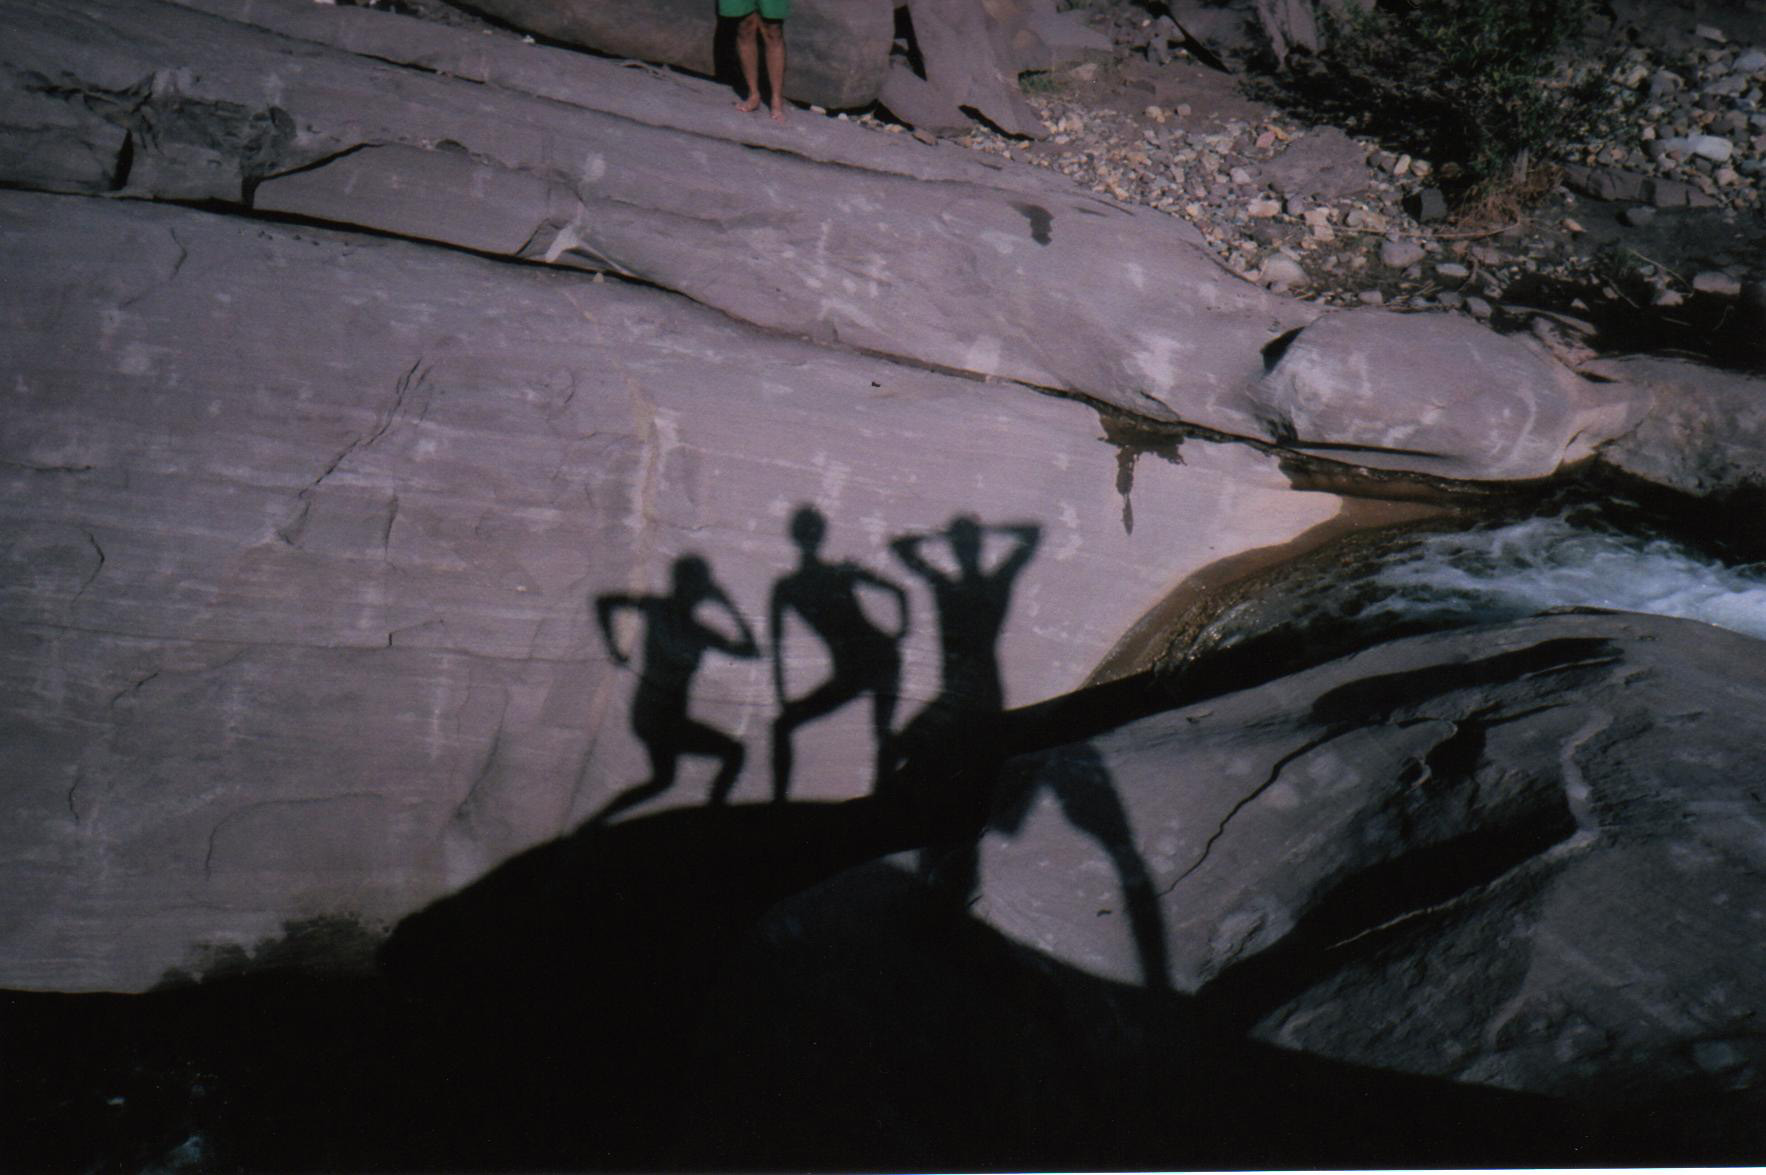 shadows of three figures striking poses on rocks